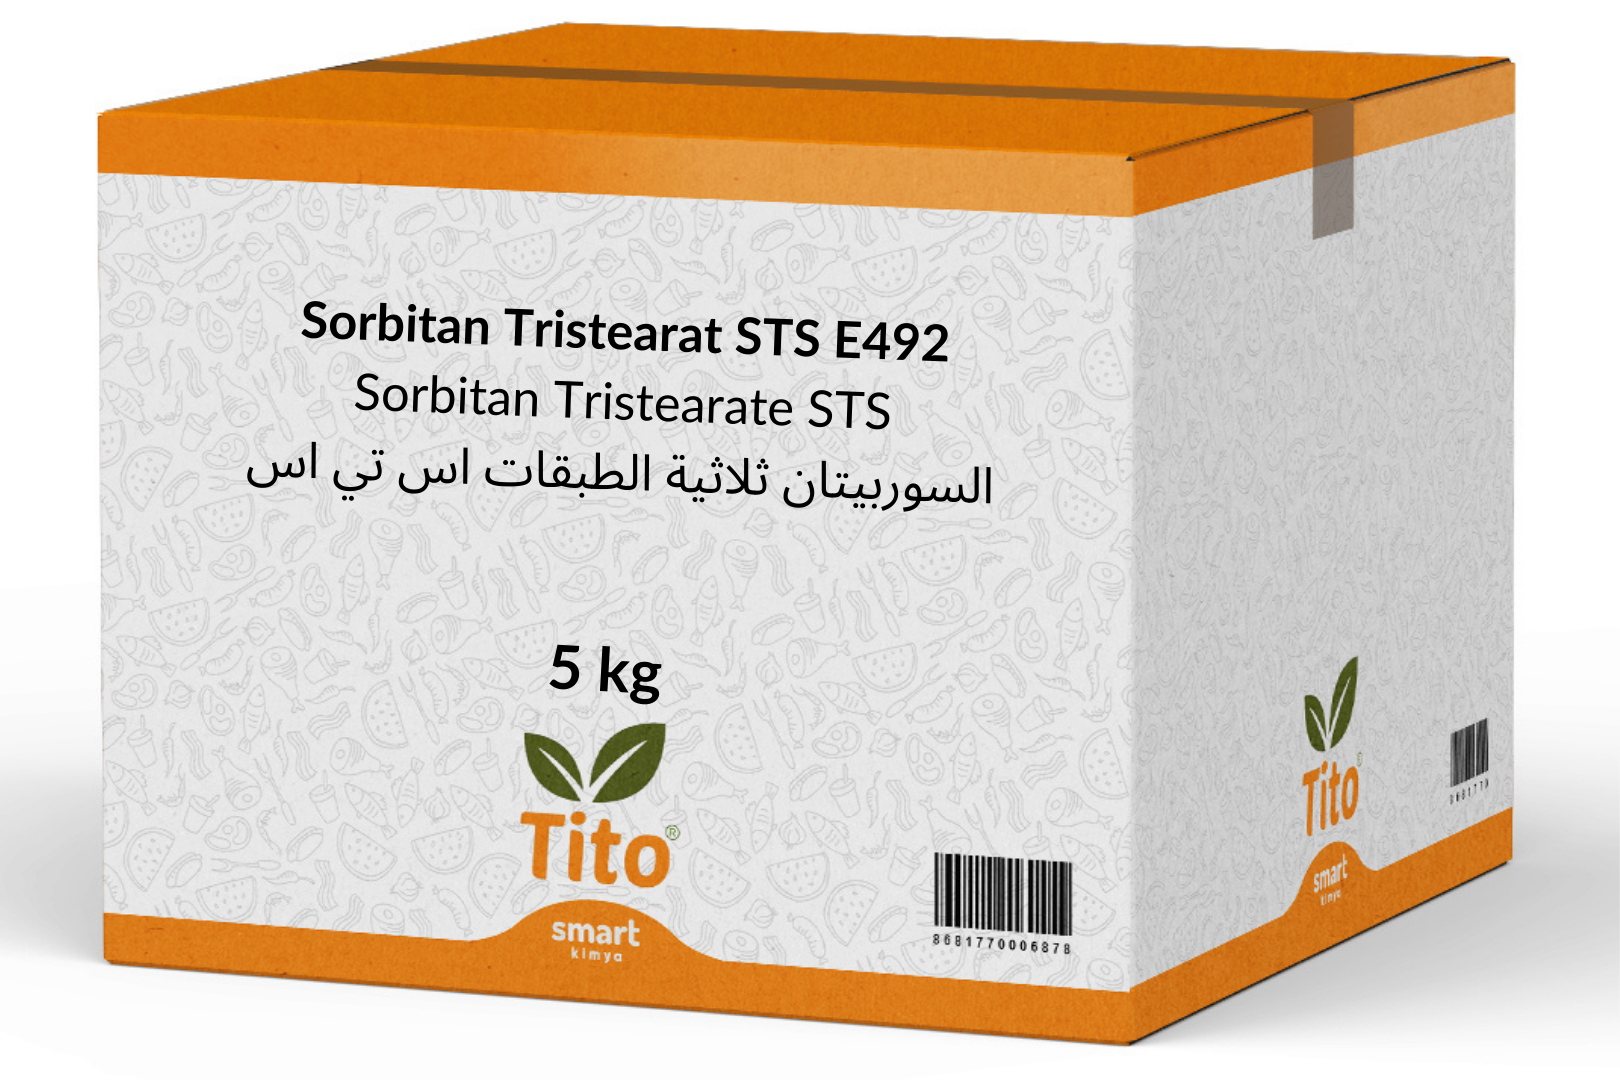 Sorbitan Tristearat STS E492 5 kg